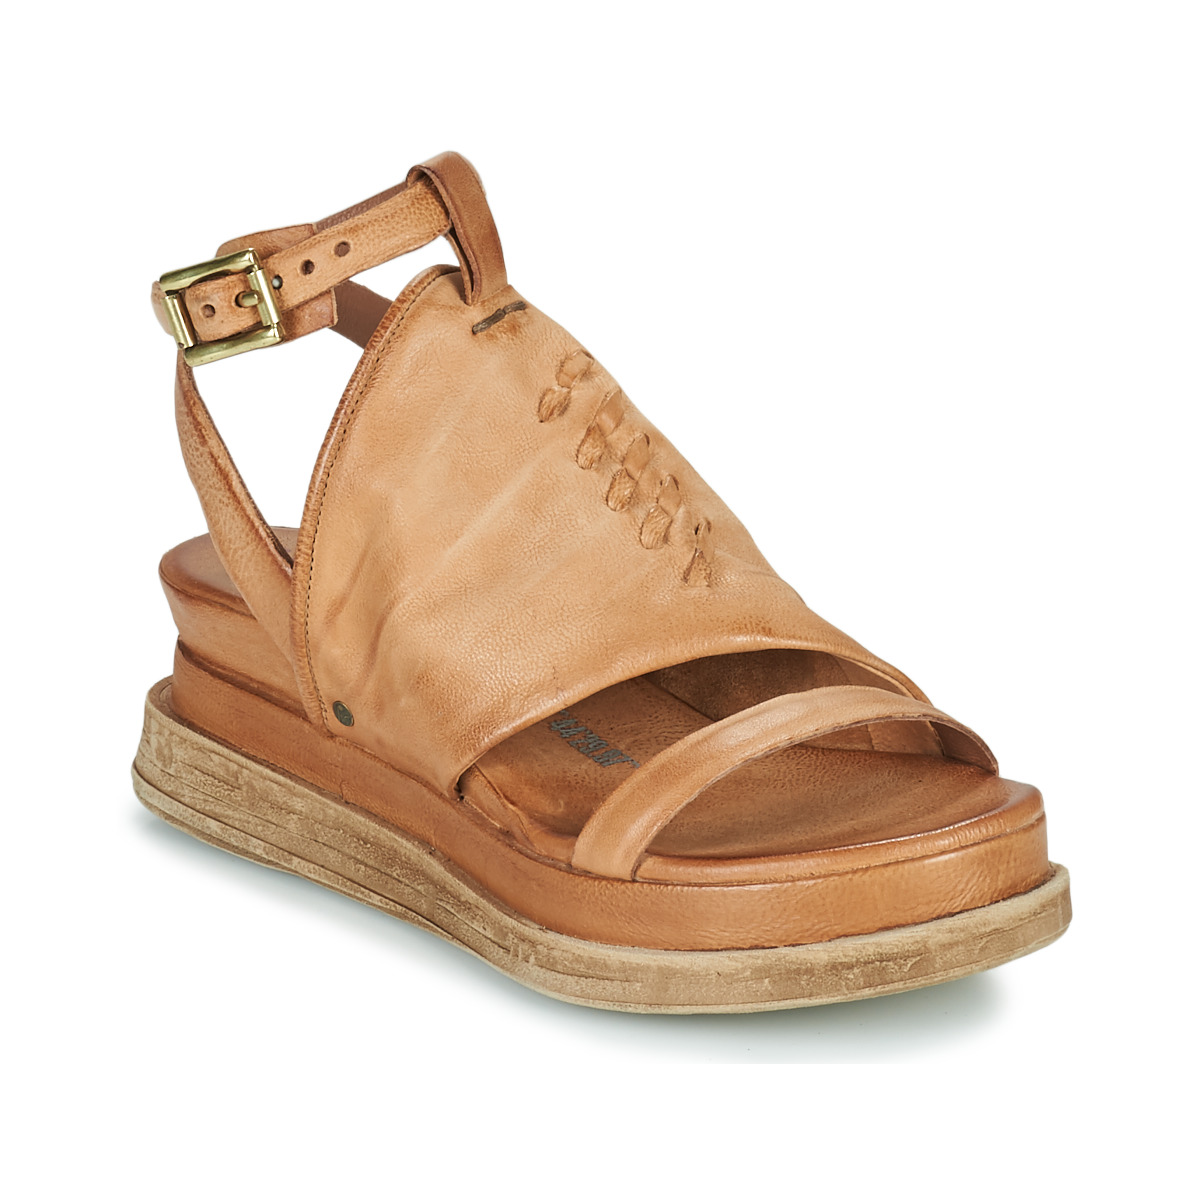 Chaussures Femme Sandales et Nu-pieds Airstep / A.S.98 LAGOS BRIDE Camel